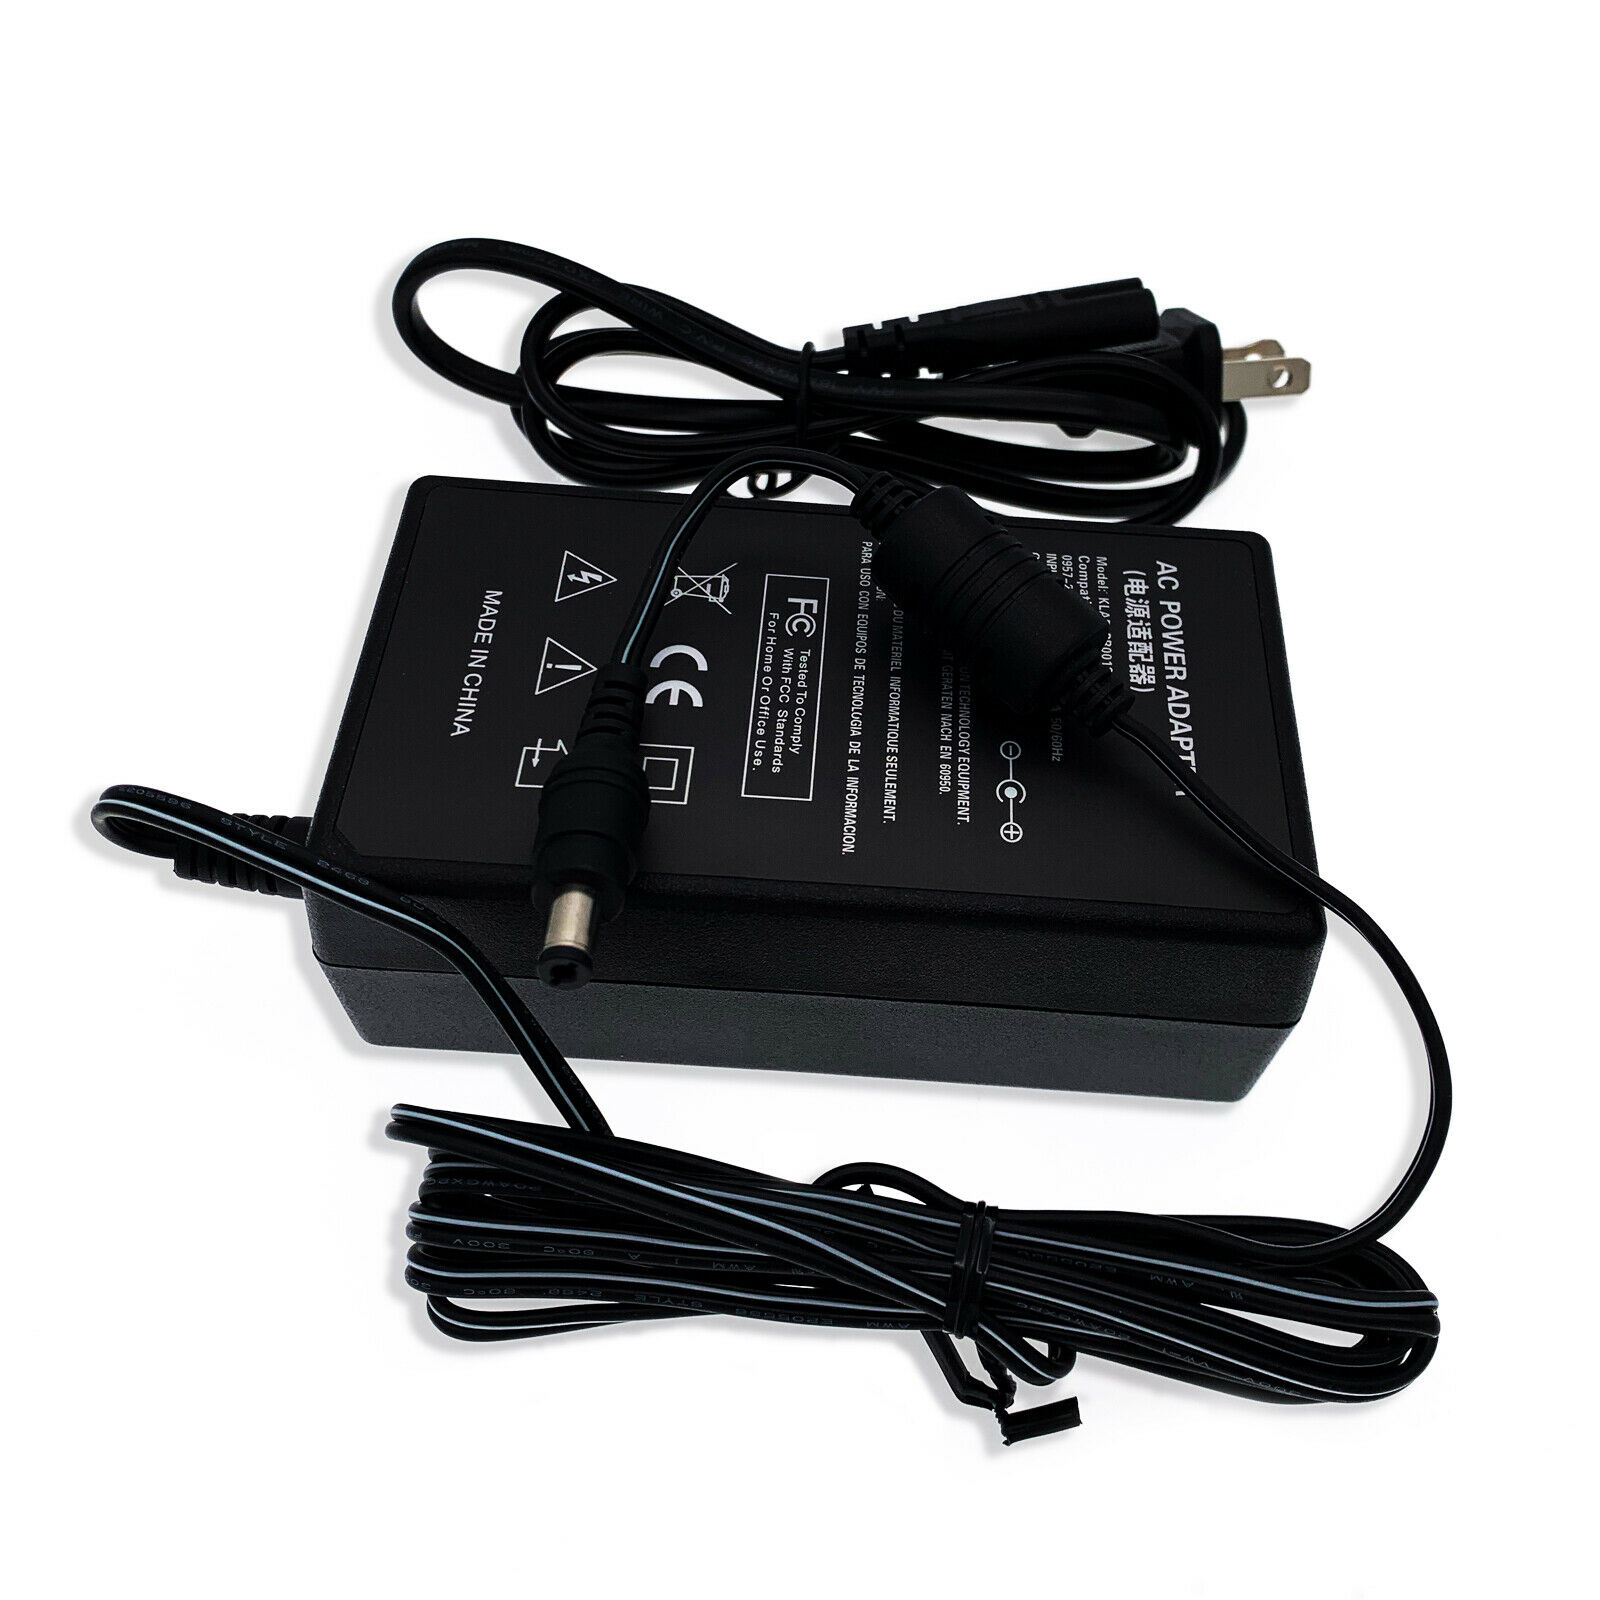 AC Adapter For HP Photosmart A612 A616 A617 A618 A626 A636 Printer Power Supply AC Adapter For HP Photosmart A612 A616